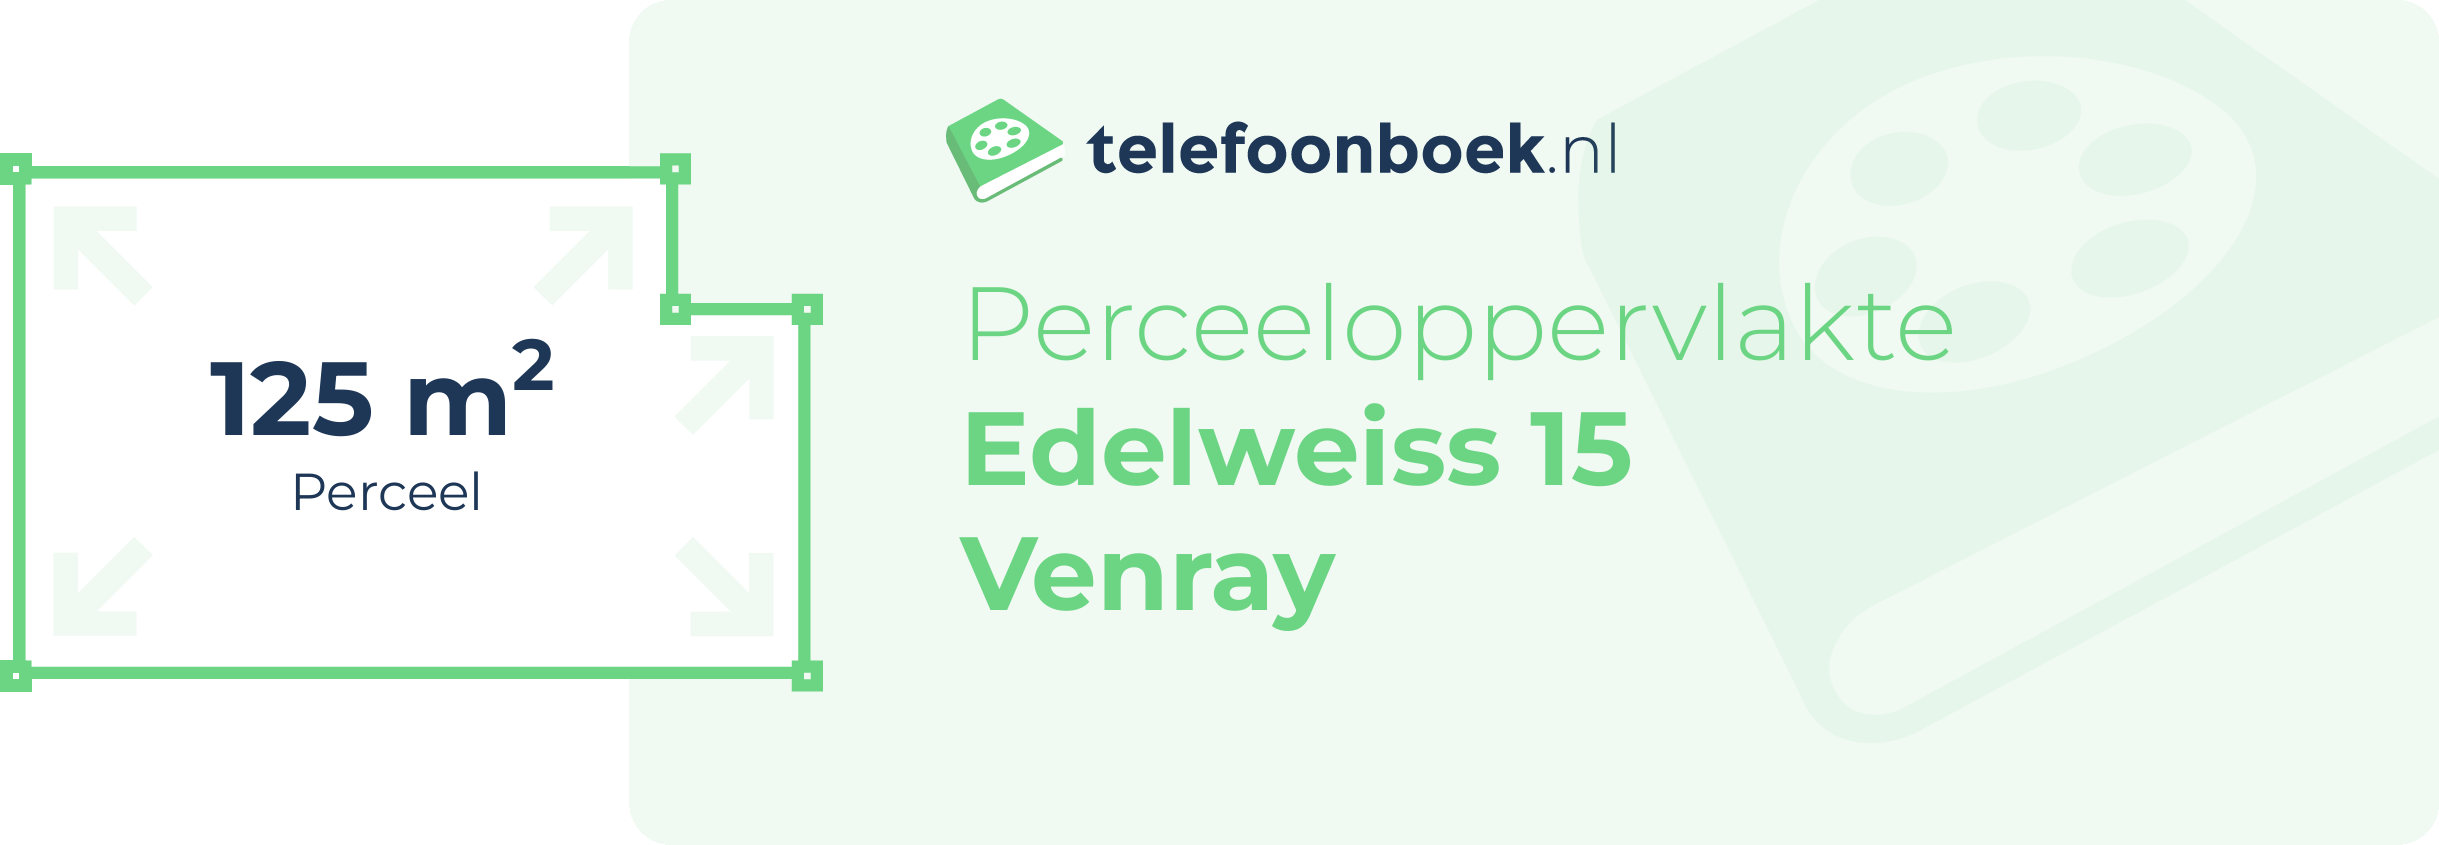 Perceeloppervlakte Edelweiss 15 Venray